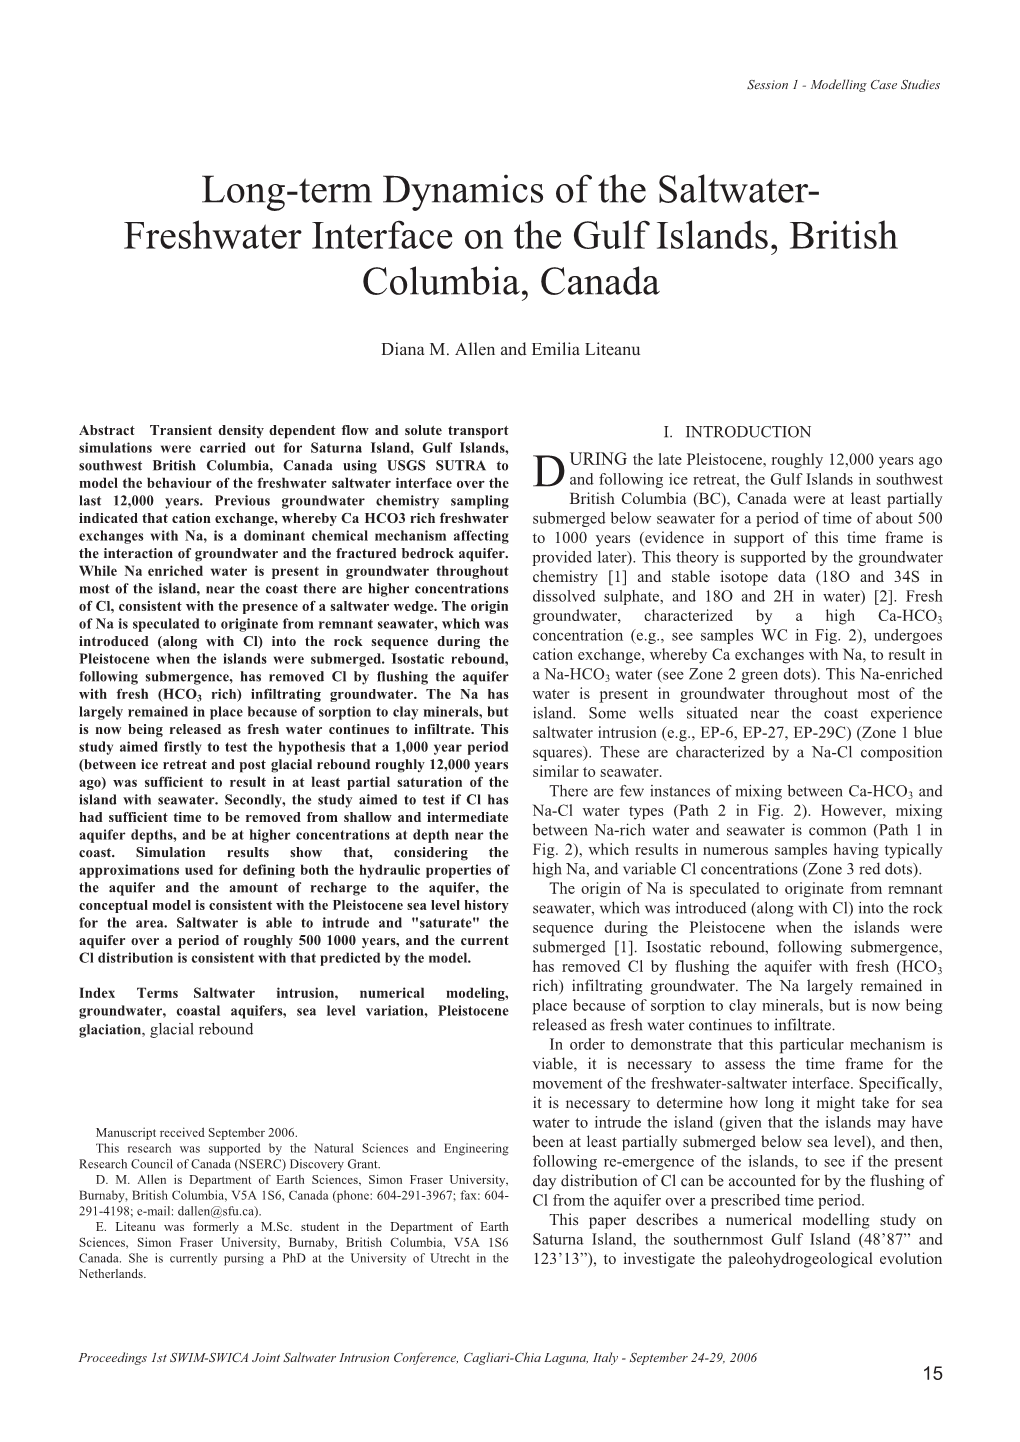 Freshwater Interface on the Gulf Islands, British Columbia, Canada